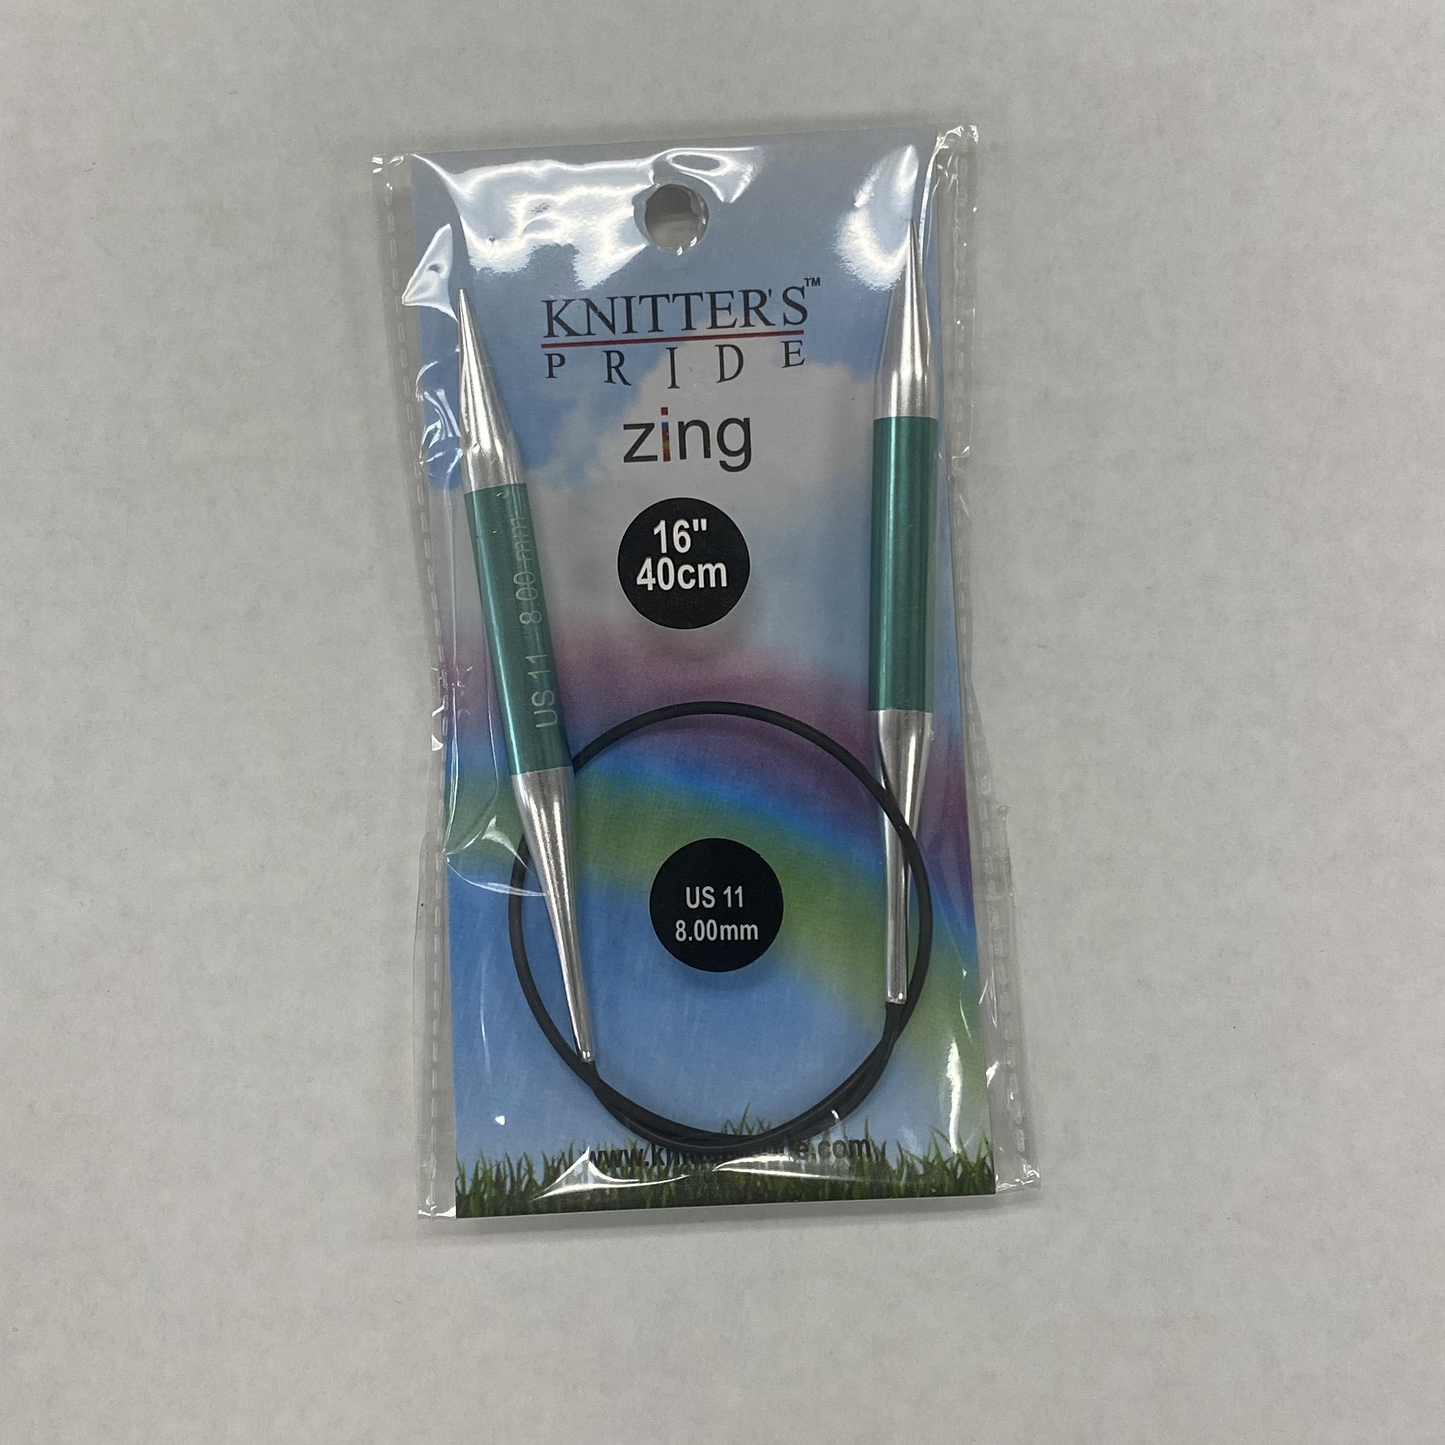 Knitter's Pride - Zing - US 11 / 8.00mm Fixed Circular Needles